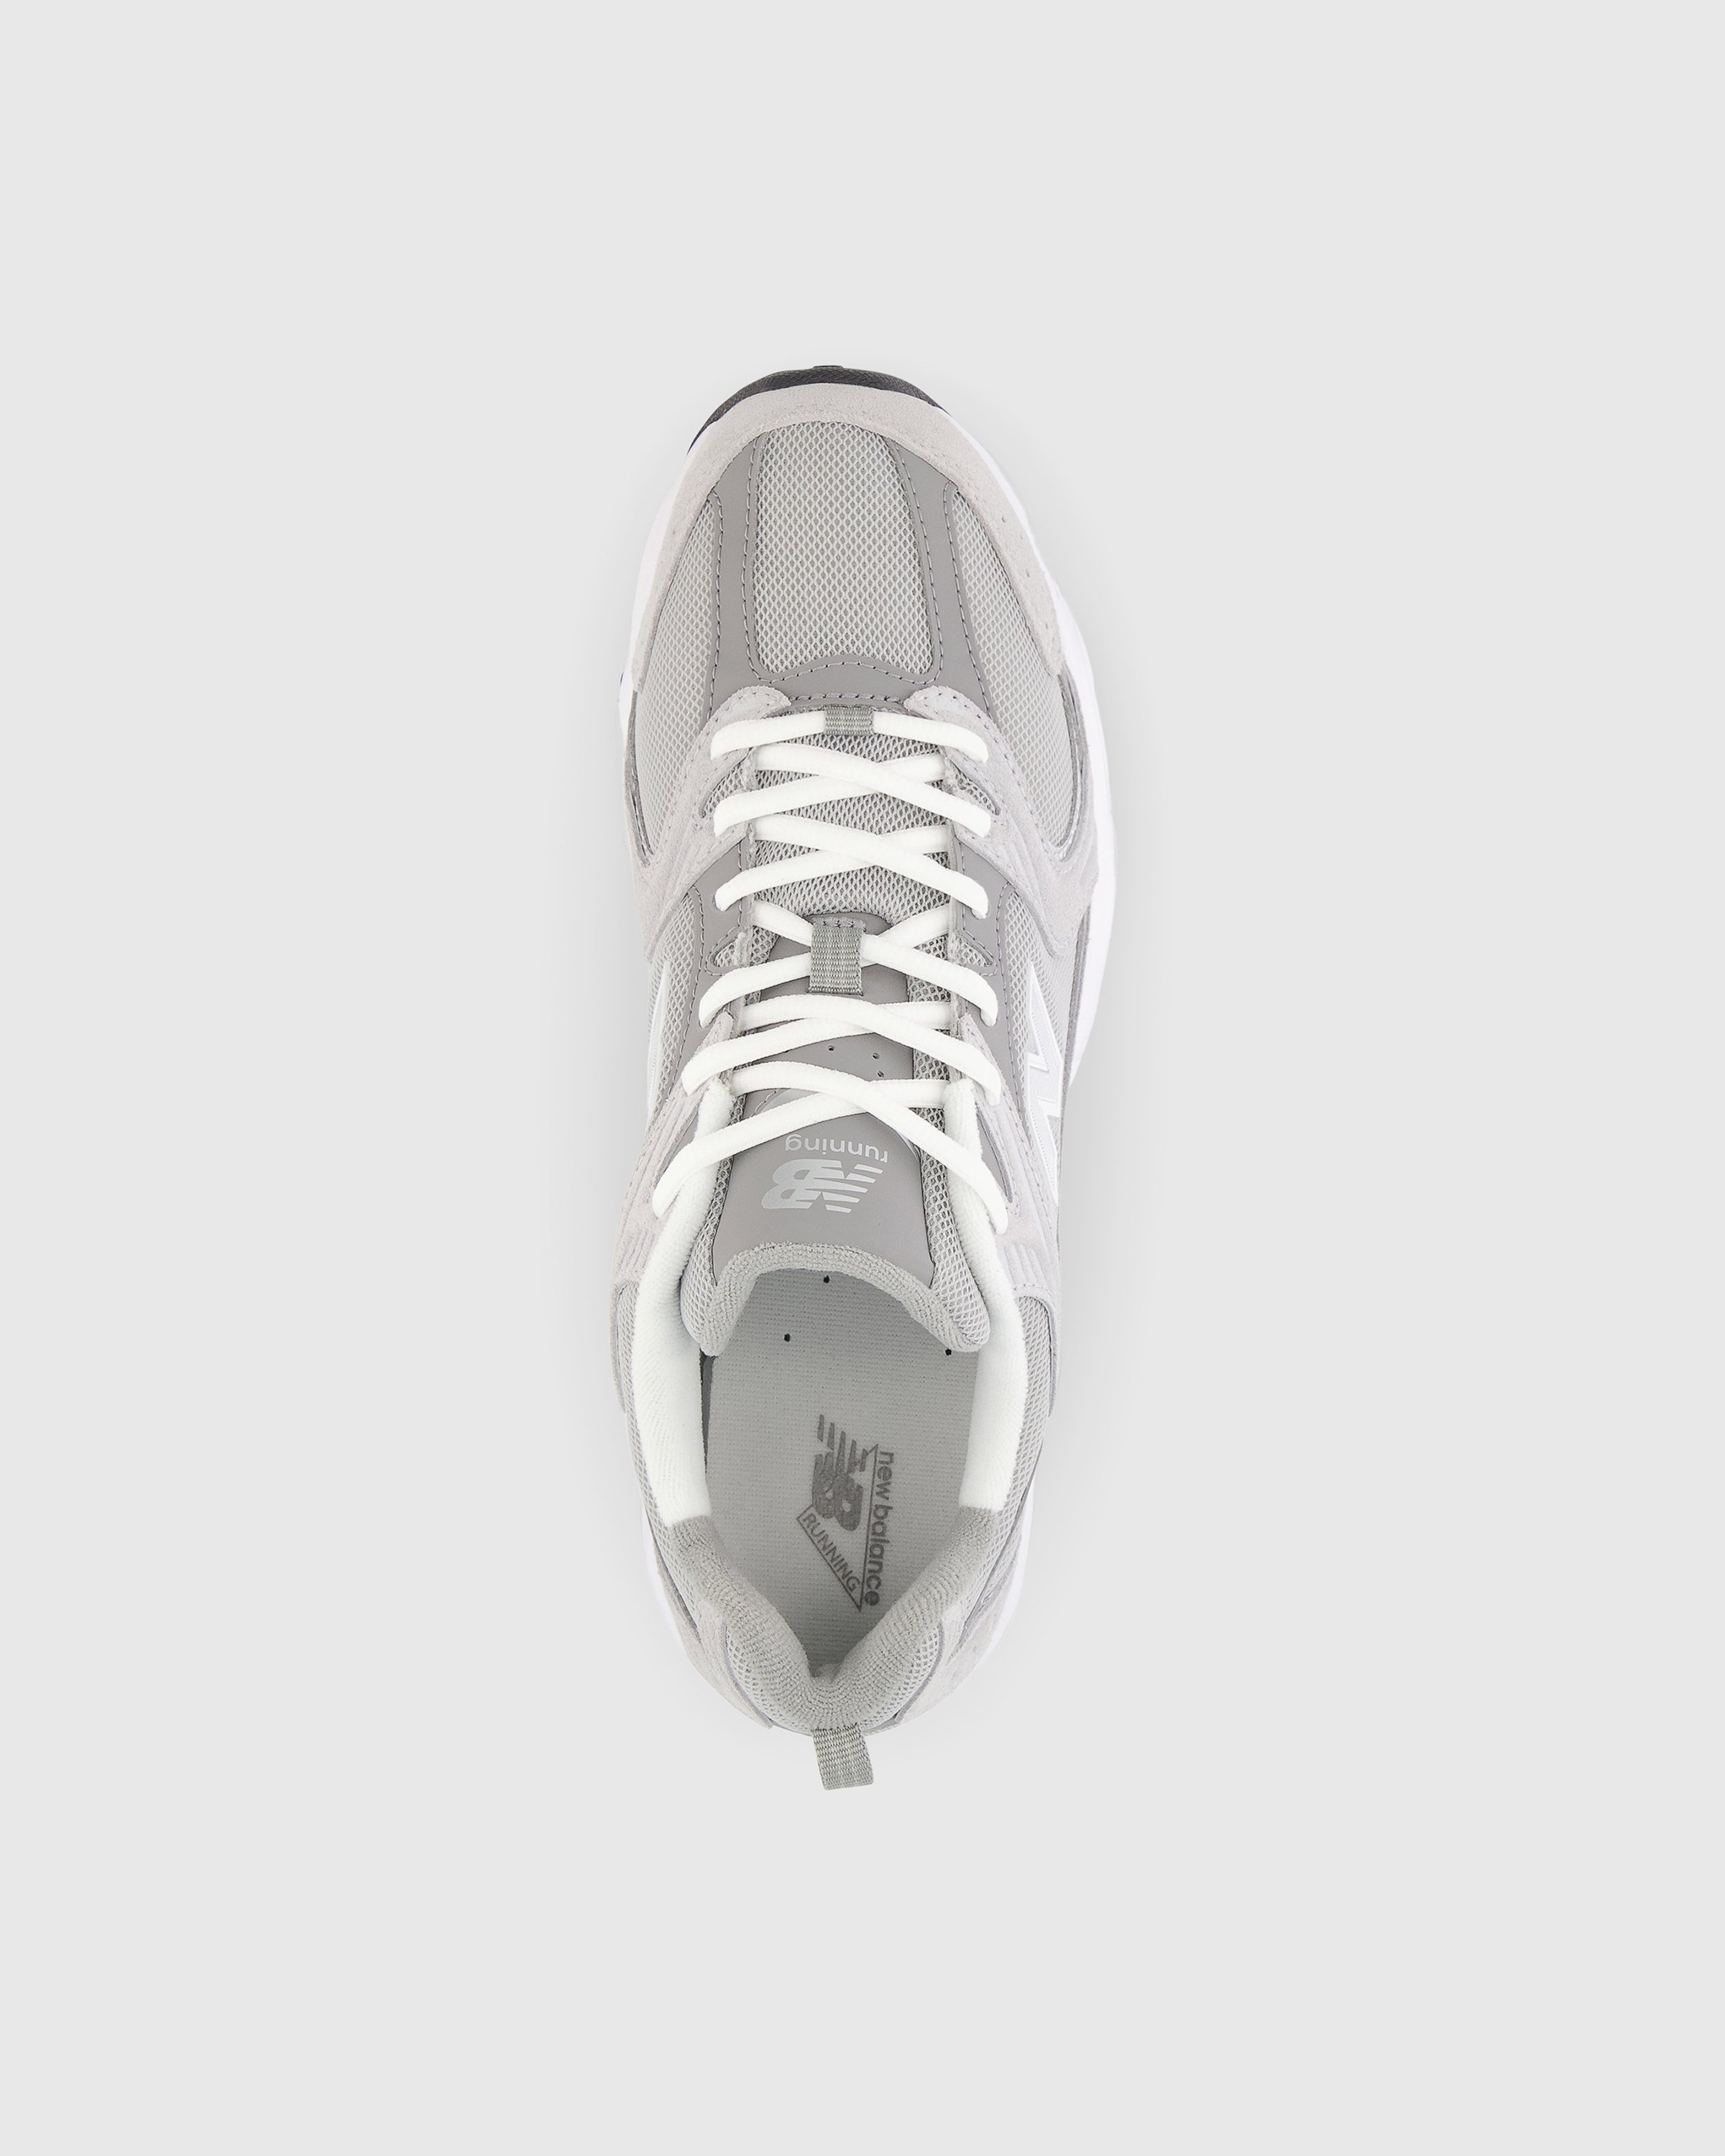 New Balance - MR530CK RAINCLOUD - Footwear - Grey - Image 4